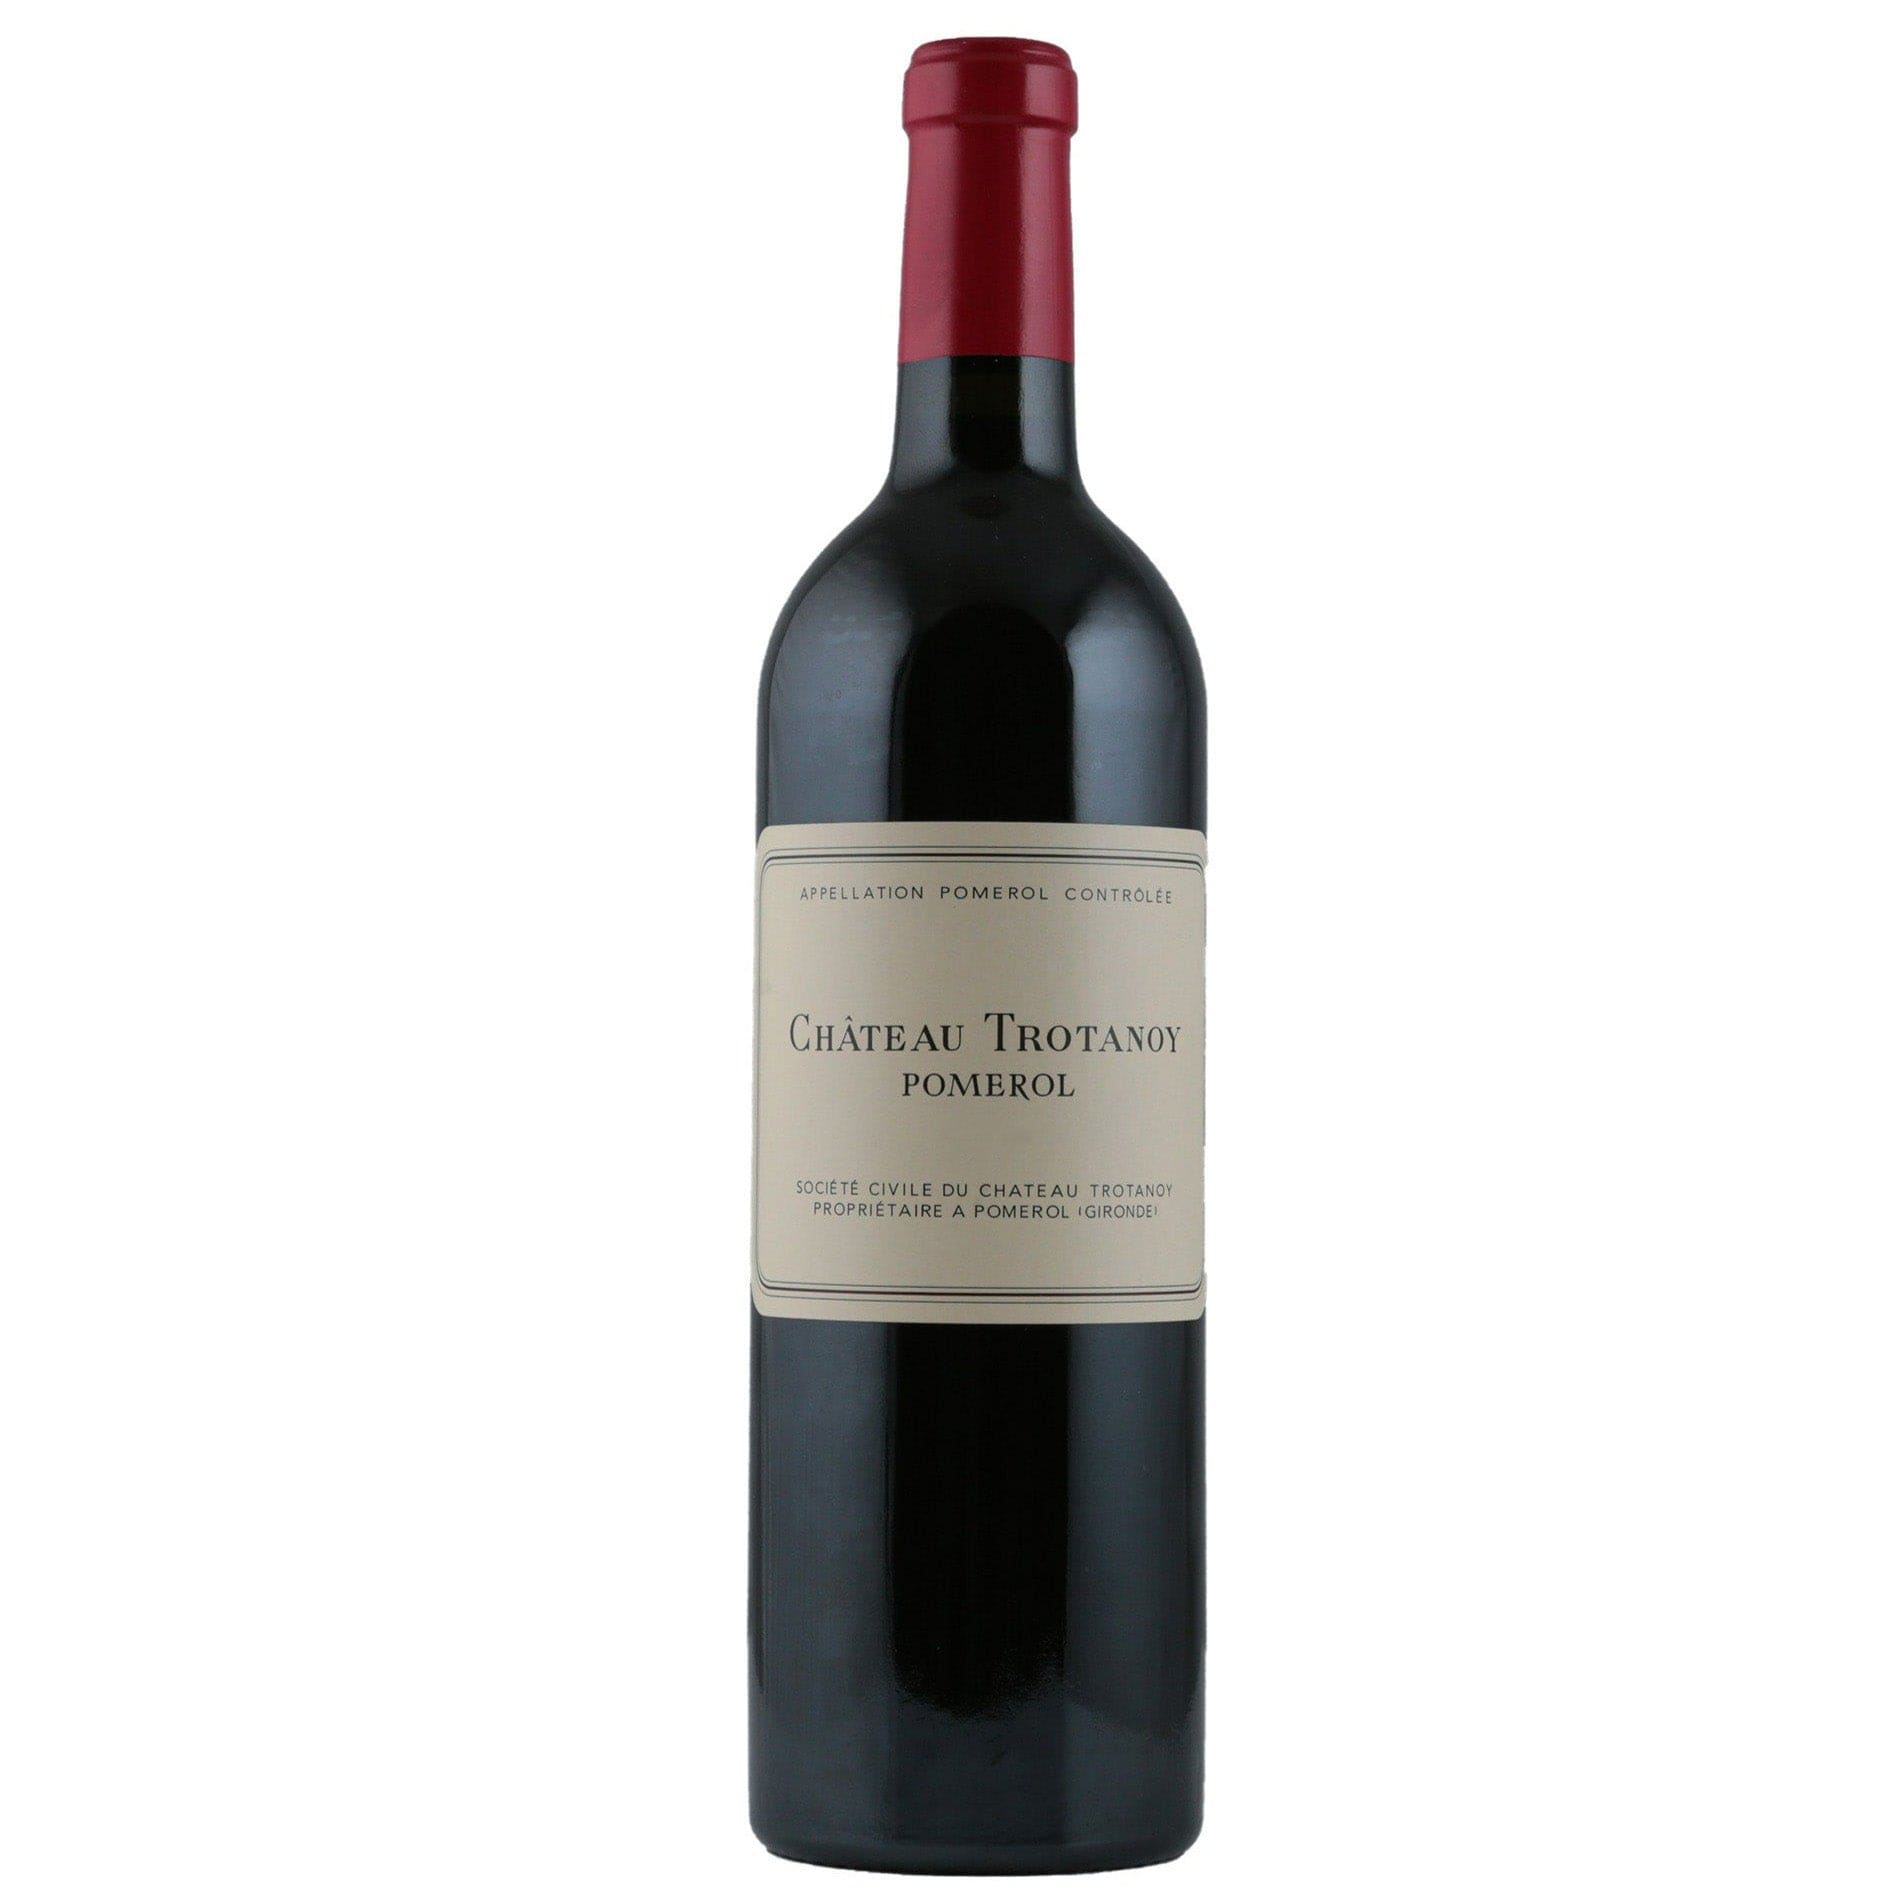 Single bottle of Red wine Ch. Trotanoy, Ch. Trotanoy, Pomerol, 2009 97% Merlot & 3% Cabernet Franc